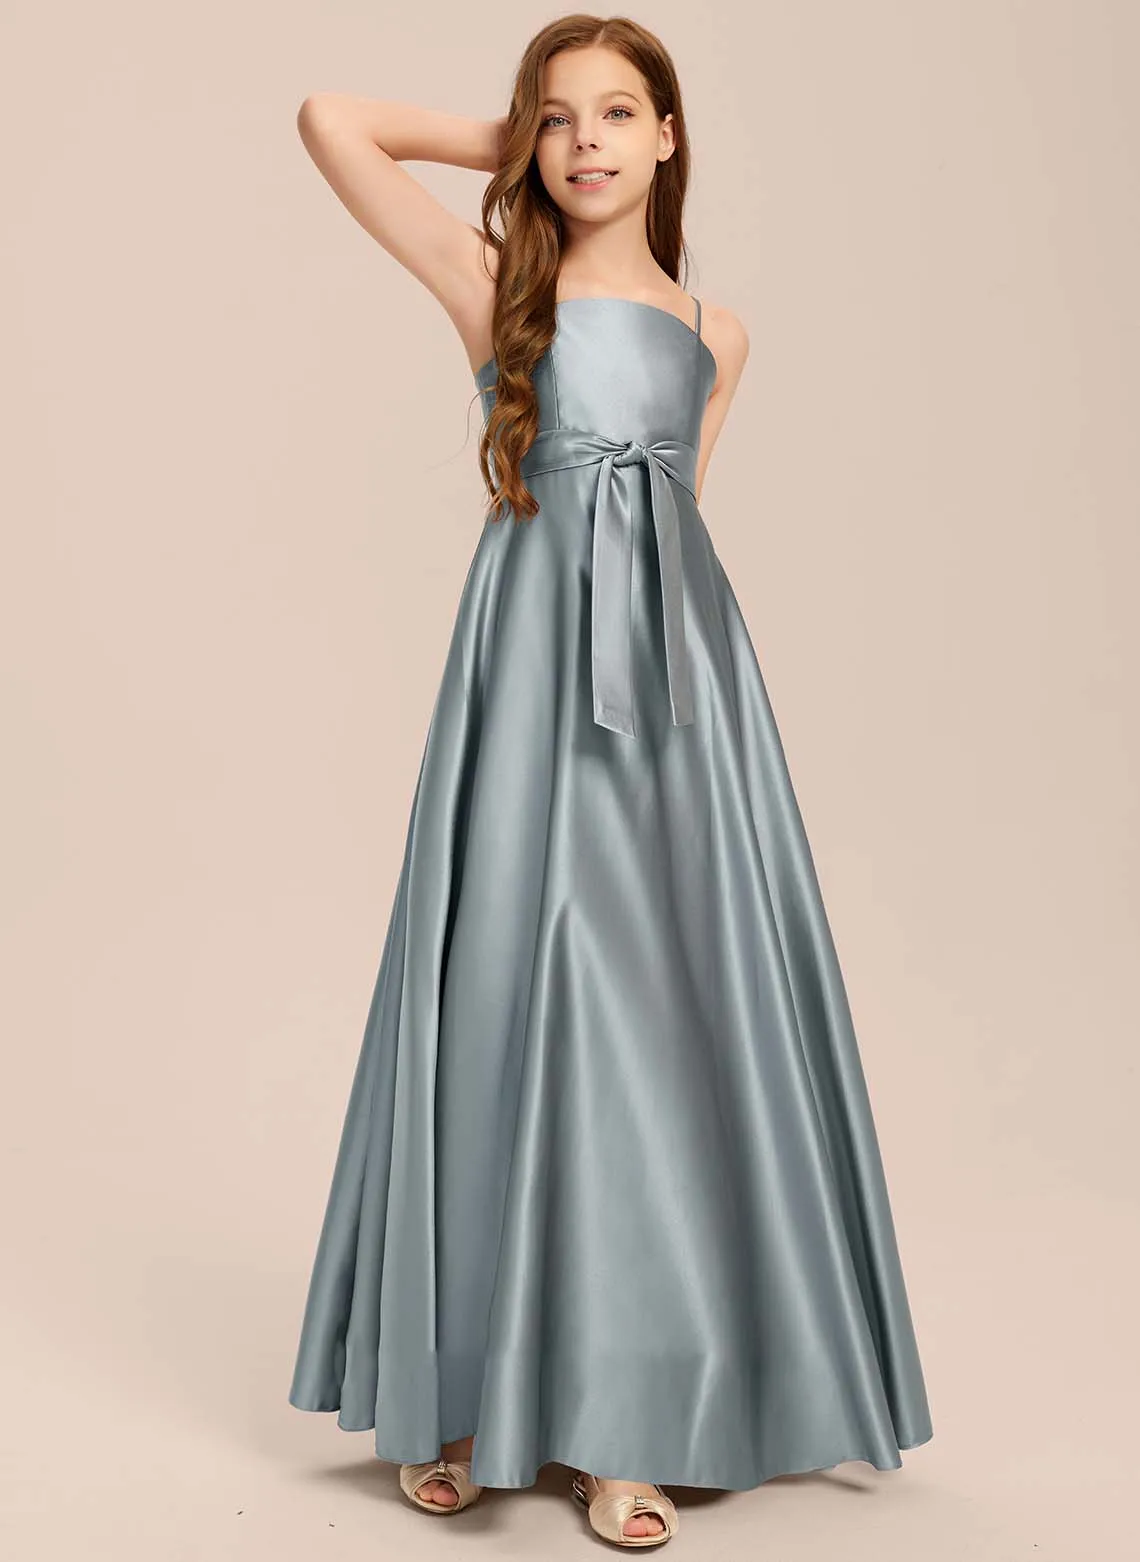 

YZYmanualroom Satin Junior Bridesmaid Dress Flower Girl Dress With Bow A-line Square Floor-Length 2-15T